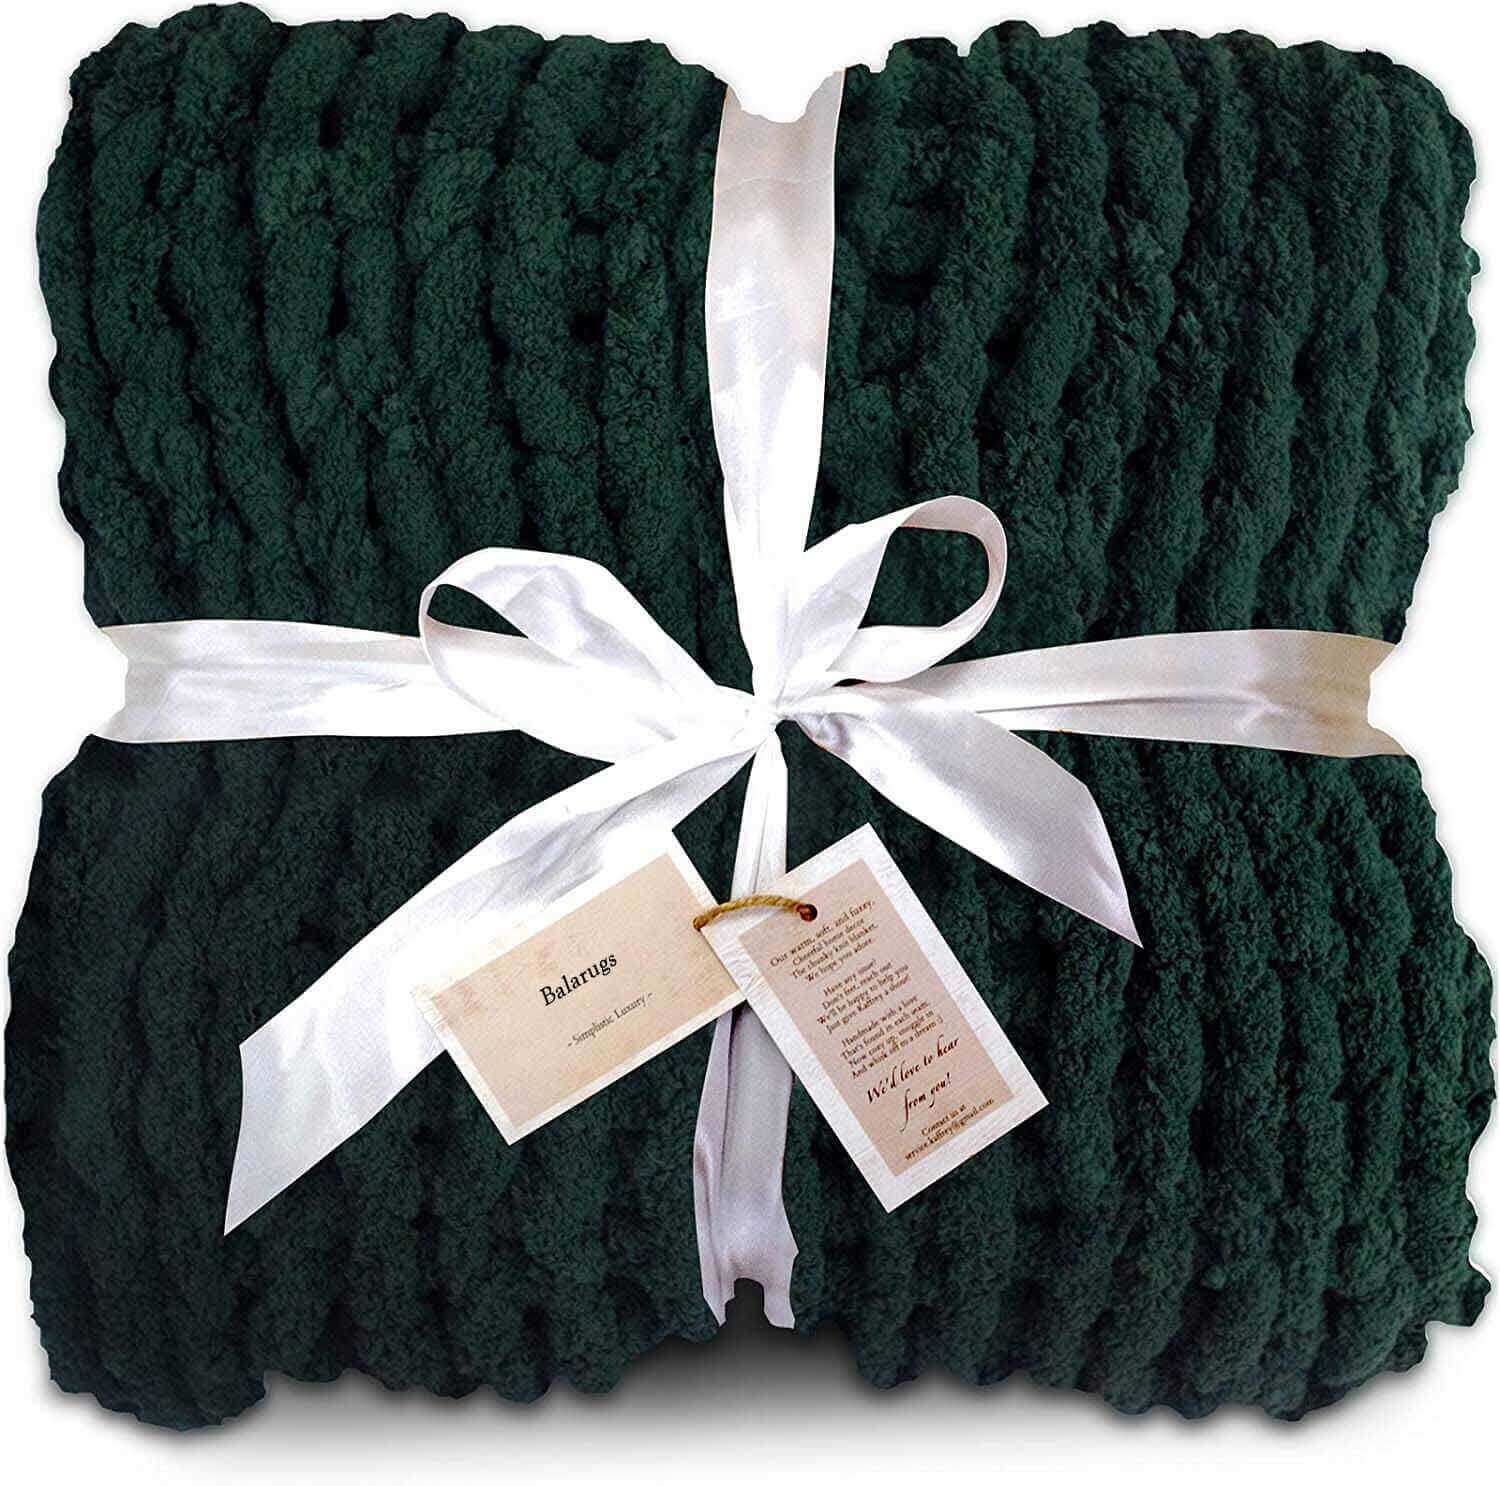 Luxury Chunky Knit Blanket, Hand-Knitted Yarn Throw Blanket, Soft Throw Blanket